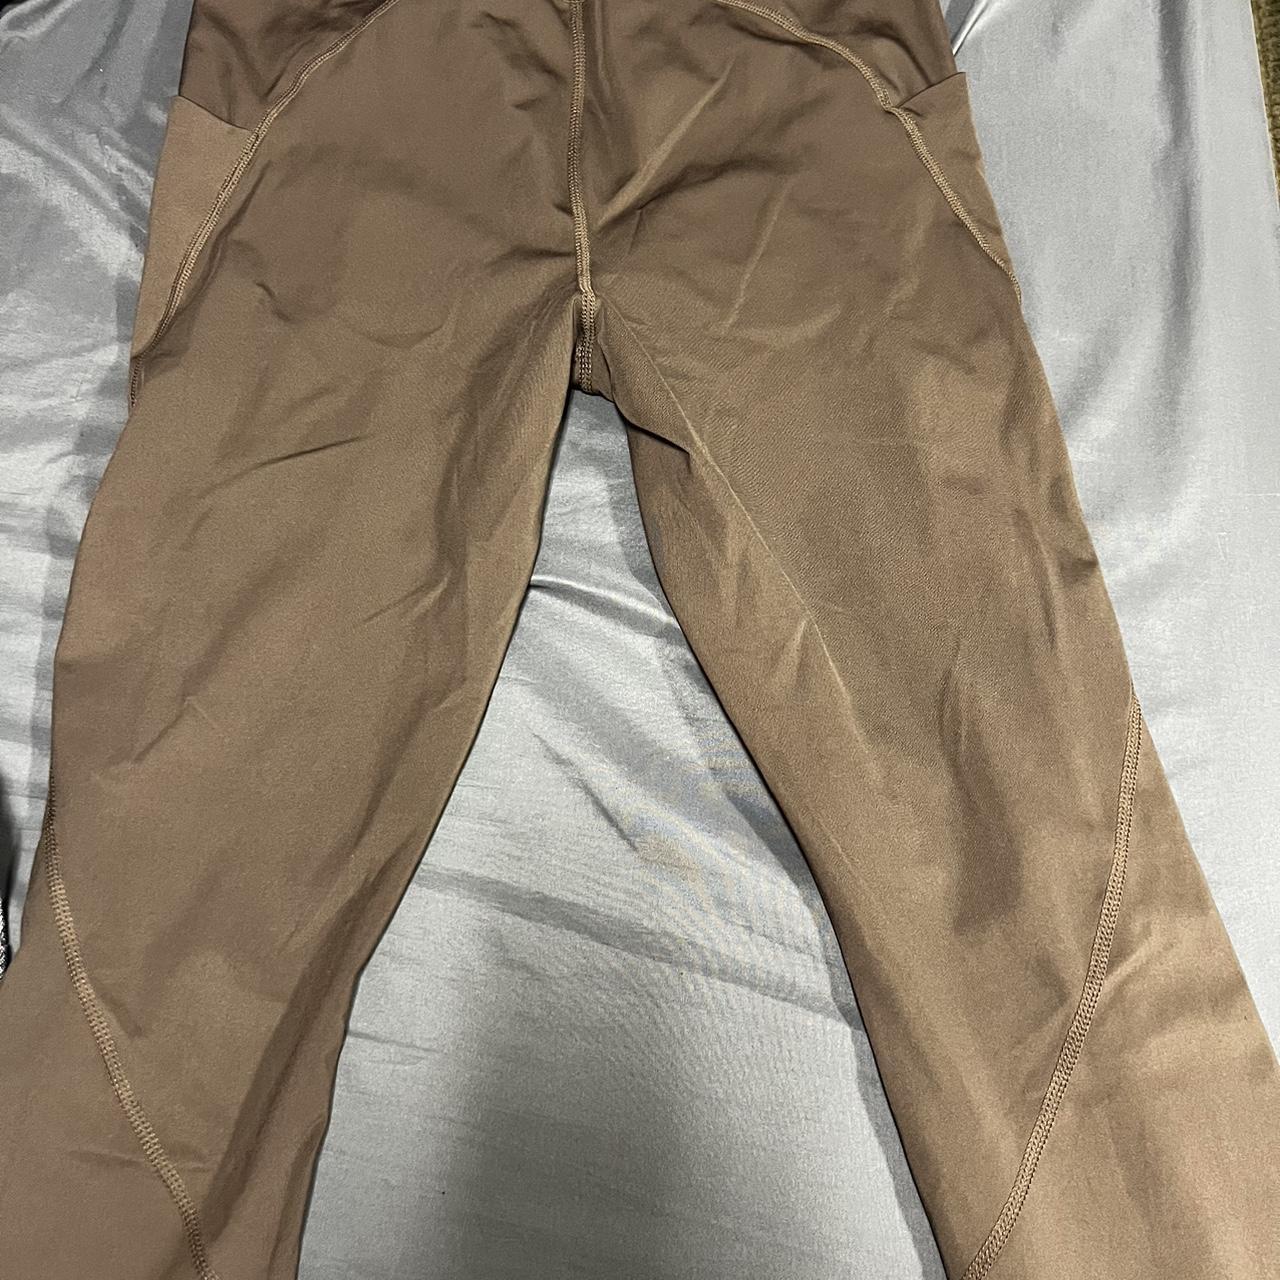 Brown workout leggings!, medium waisted , Size large